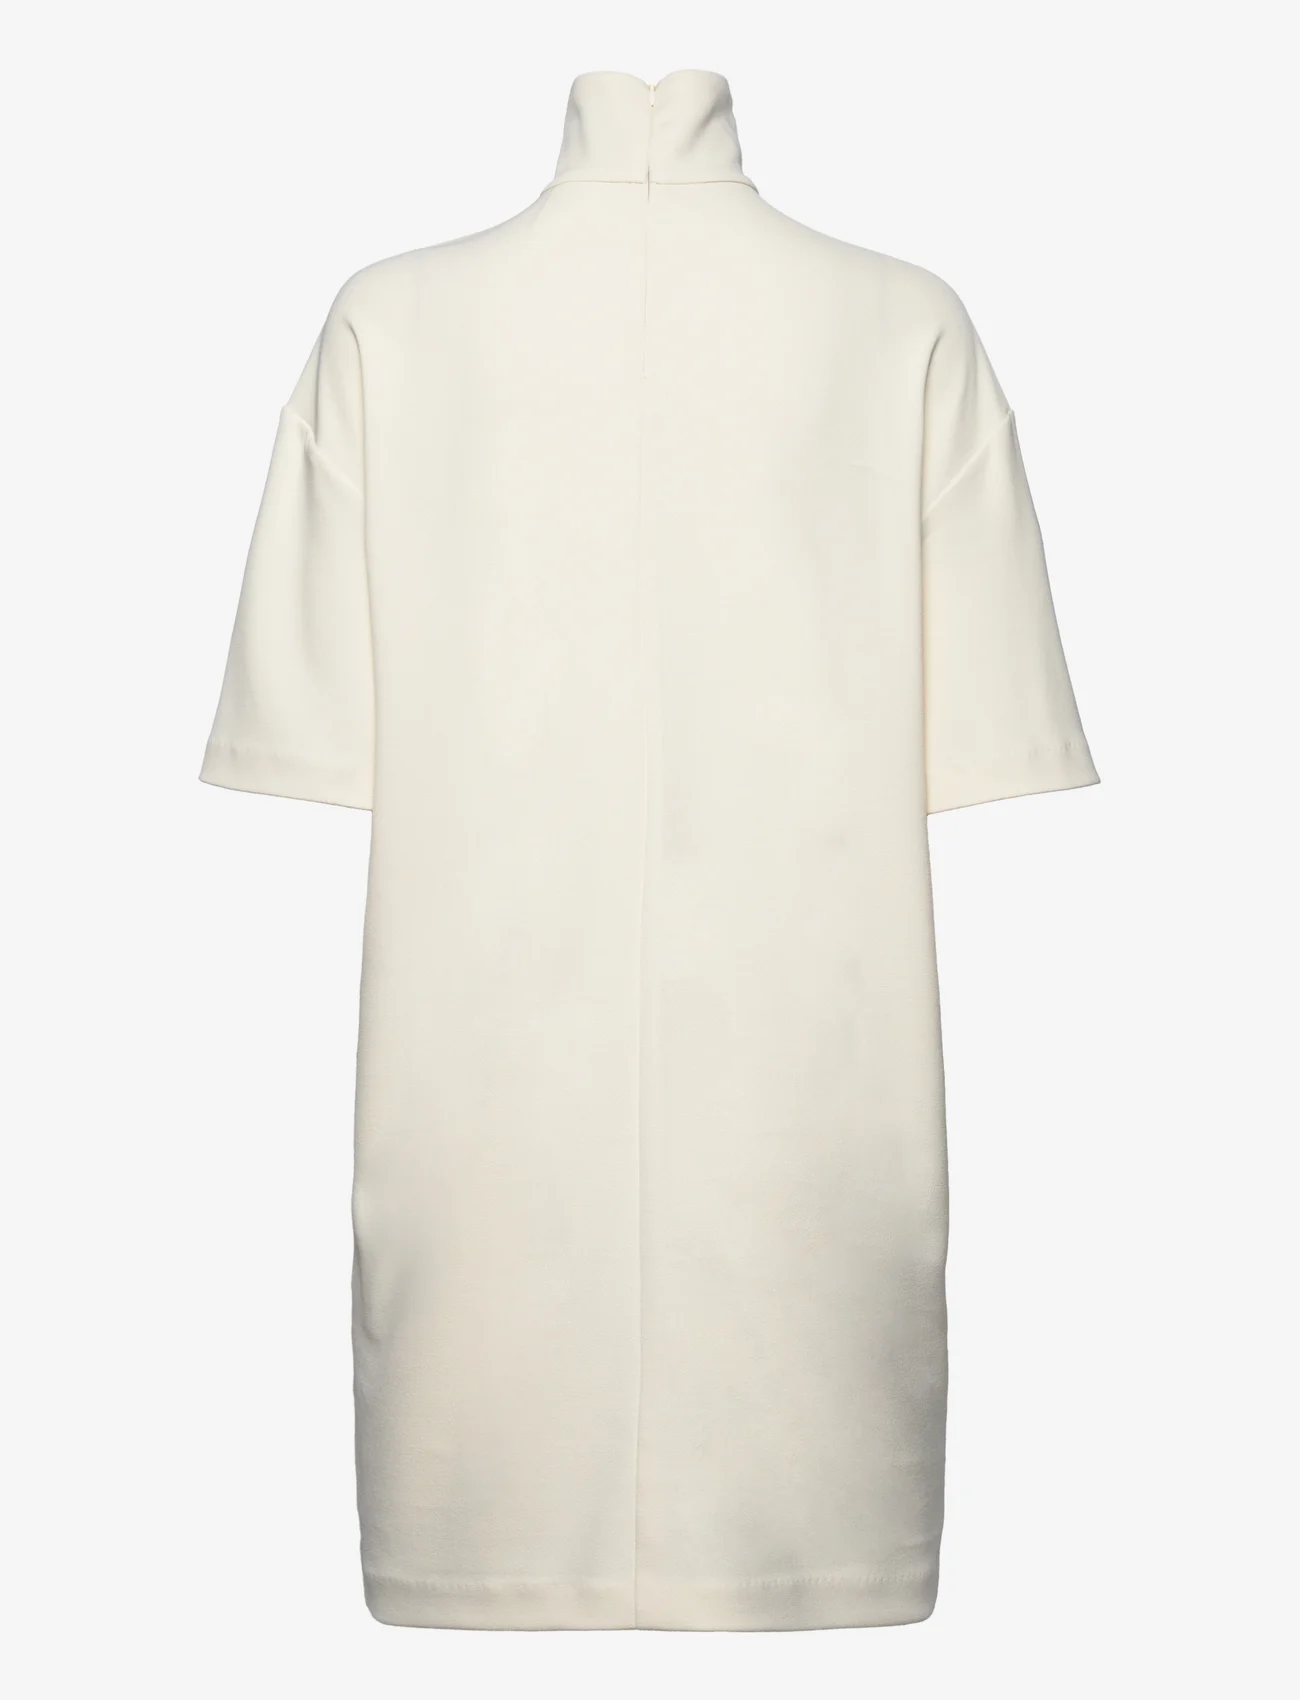 Day Birger et Mikkelsen - Vivien - All Day Jersey - t-shirt dresses - cloud cream - 1